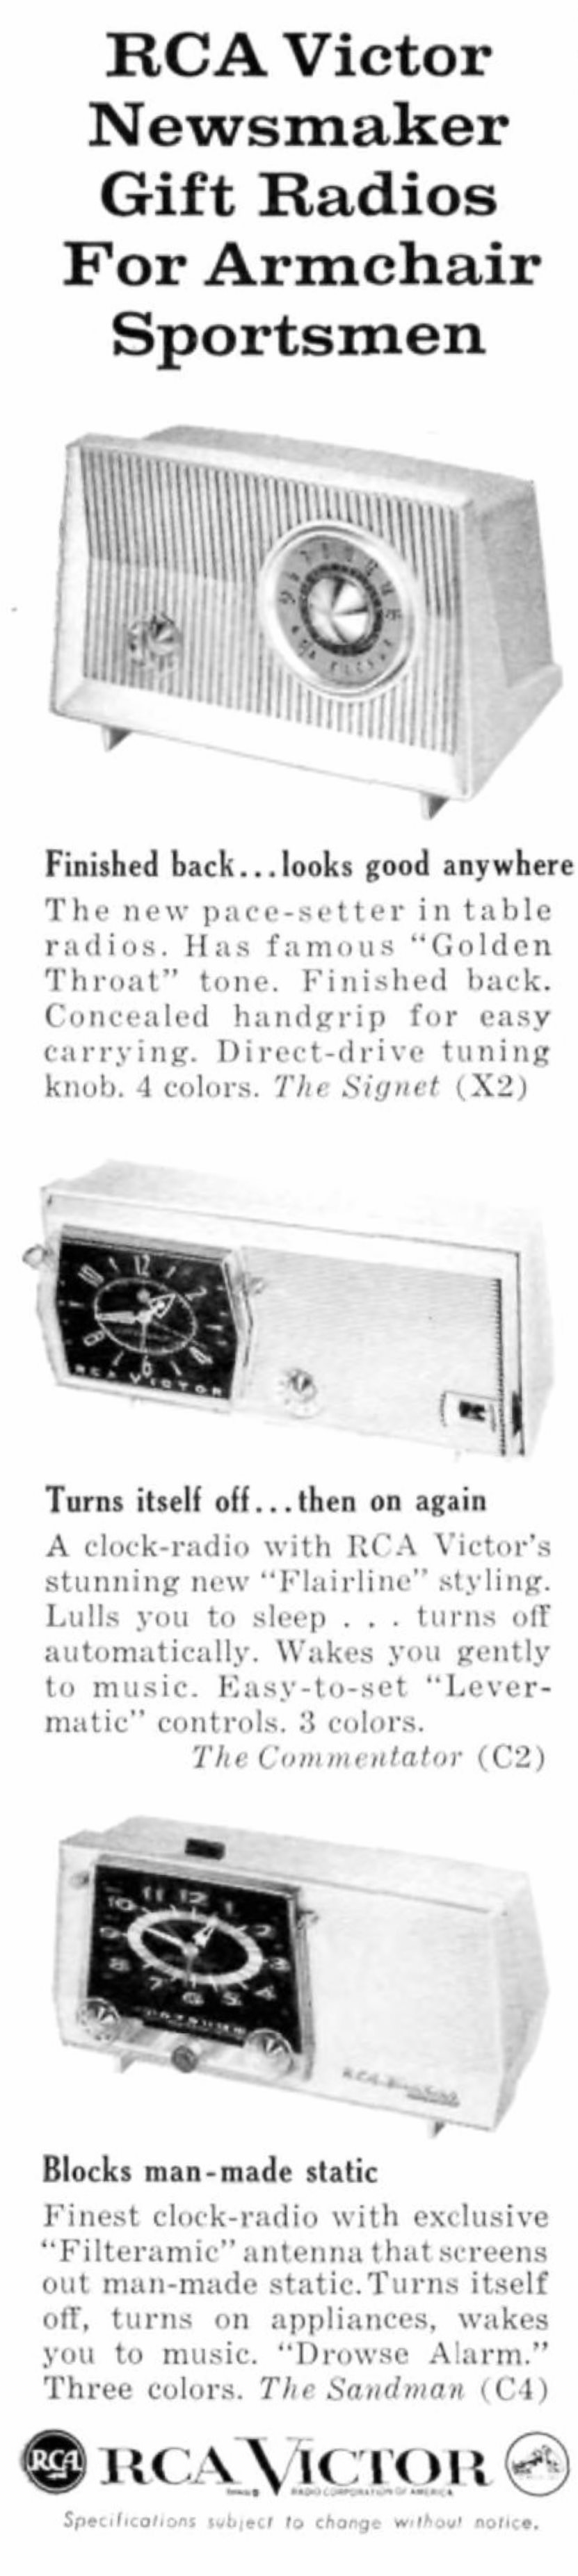 RCA 1959 219.jpg